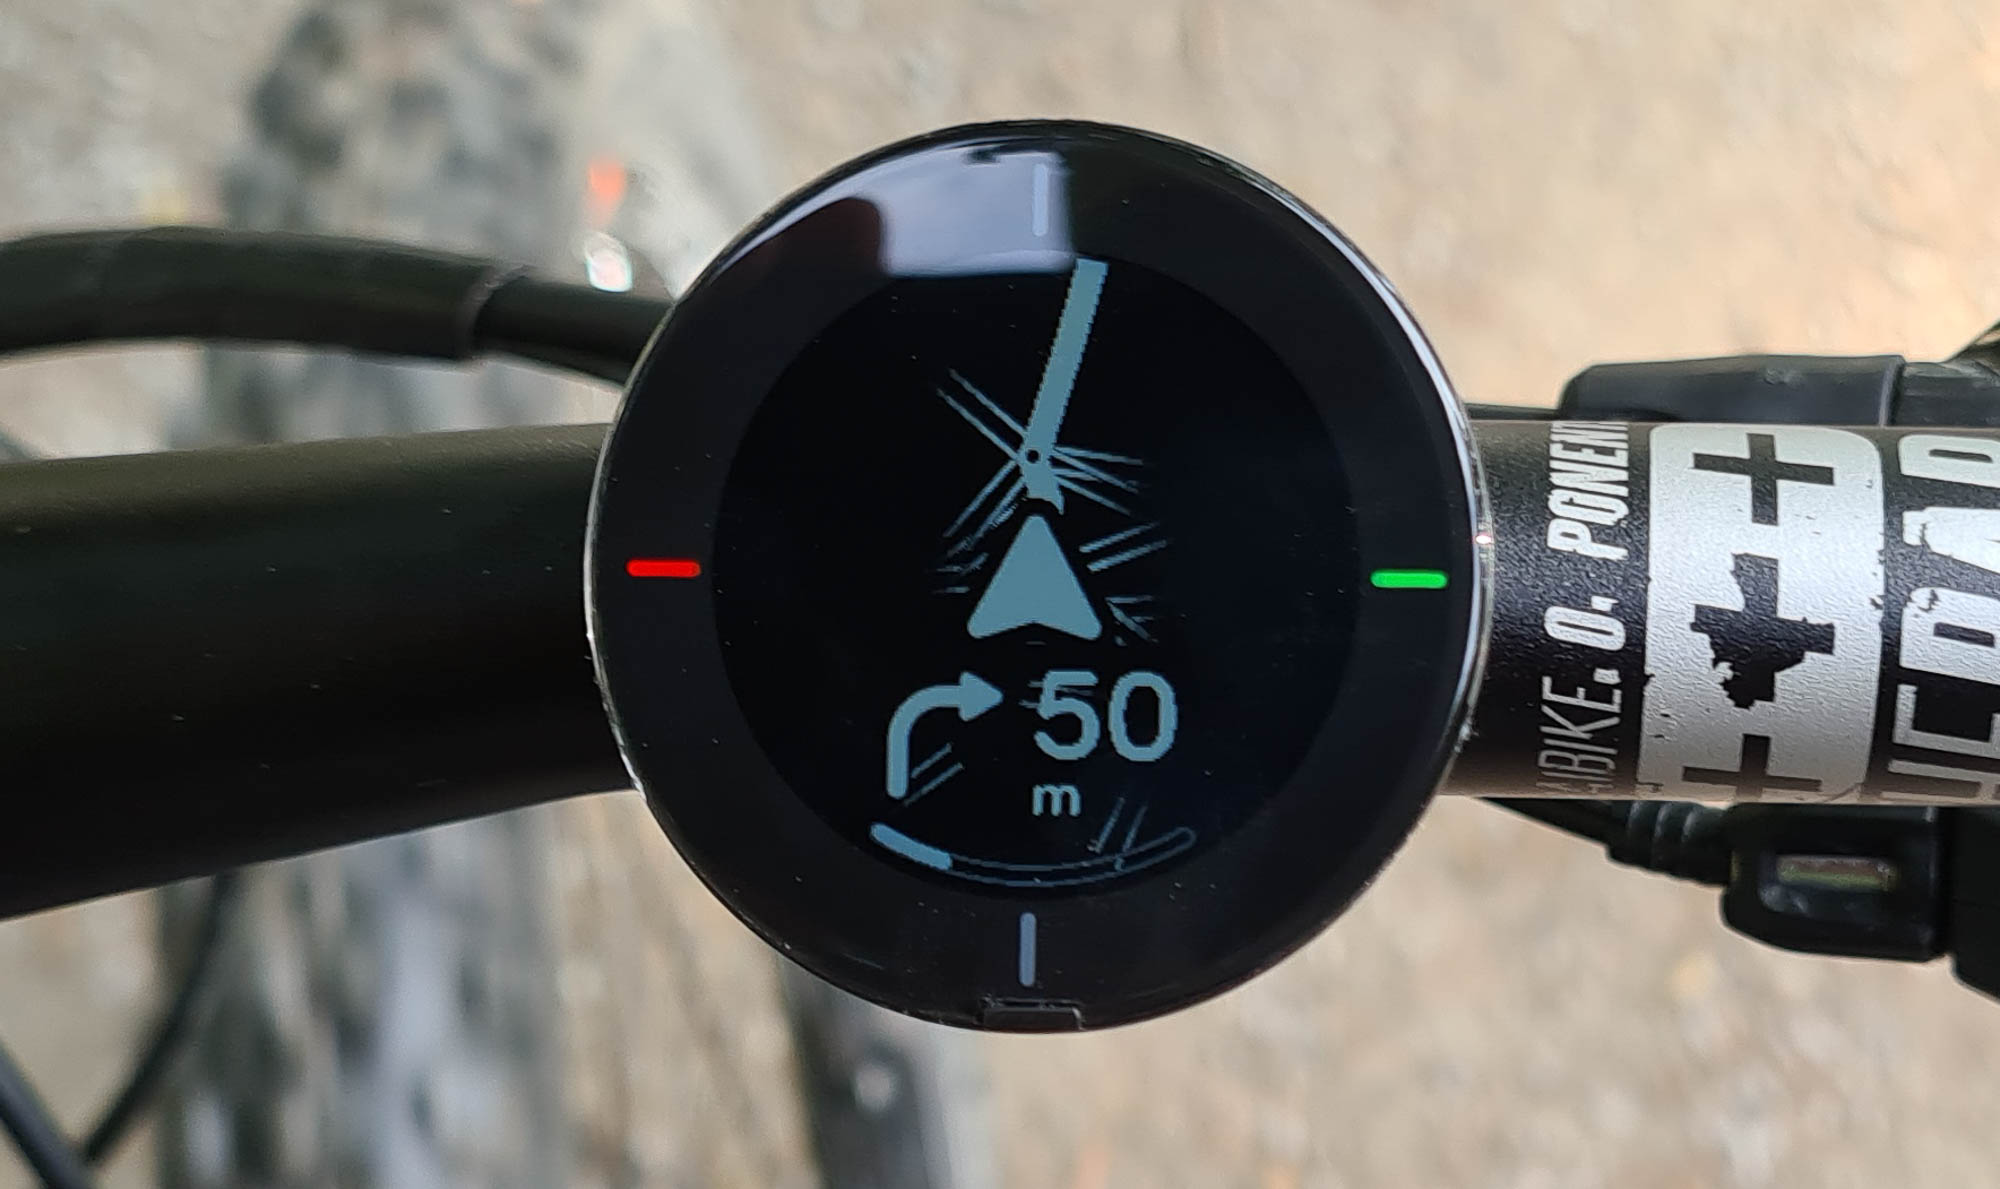 Braucht man das? - Fahrrad-Navi Beeline Smart Compass - Wirtschaft - SZ.de